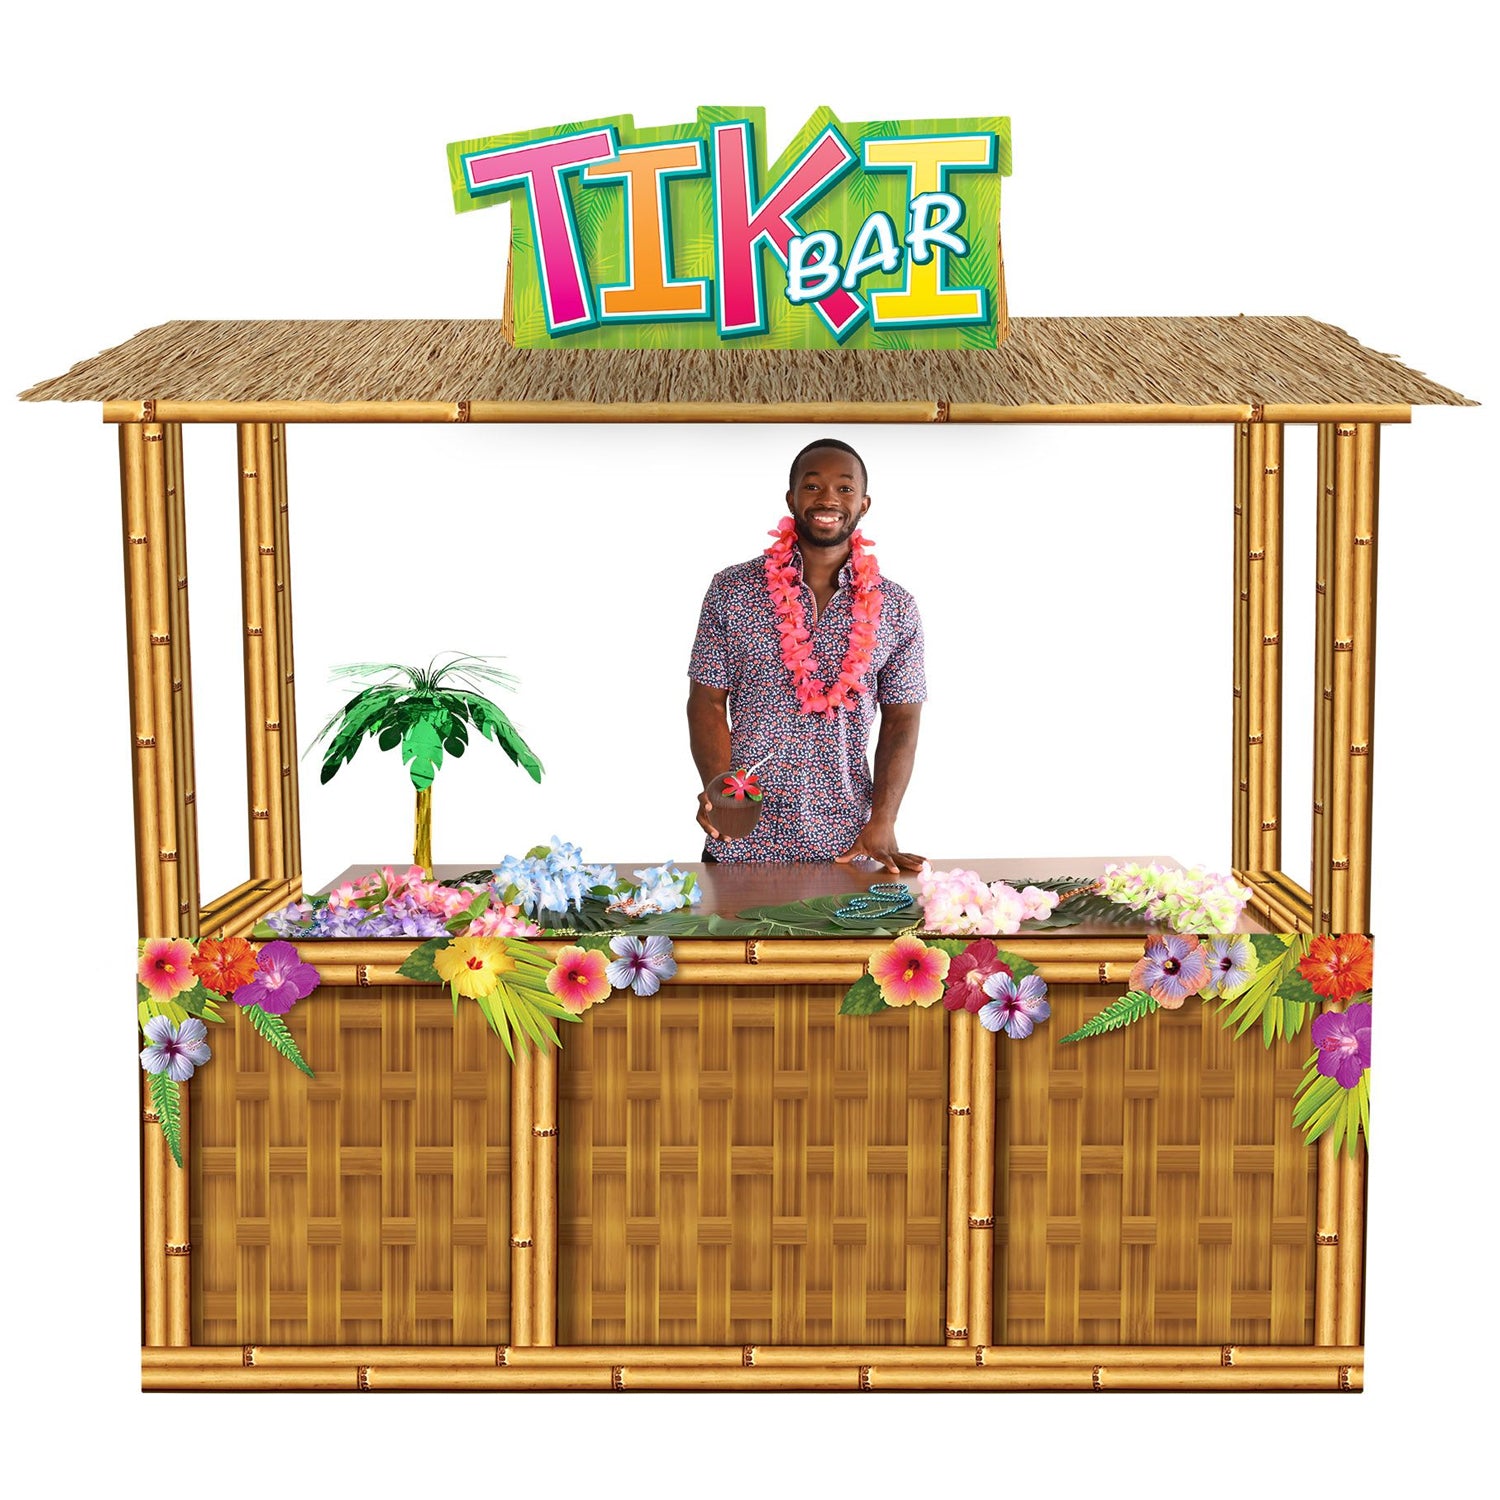 3D Giant Tiki Bar Cardboard Prop Decoration - 220cm x 210cm